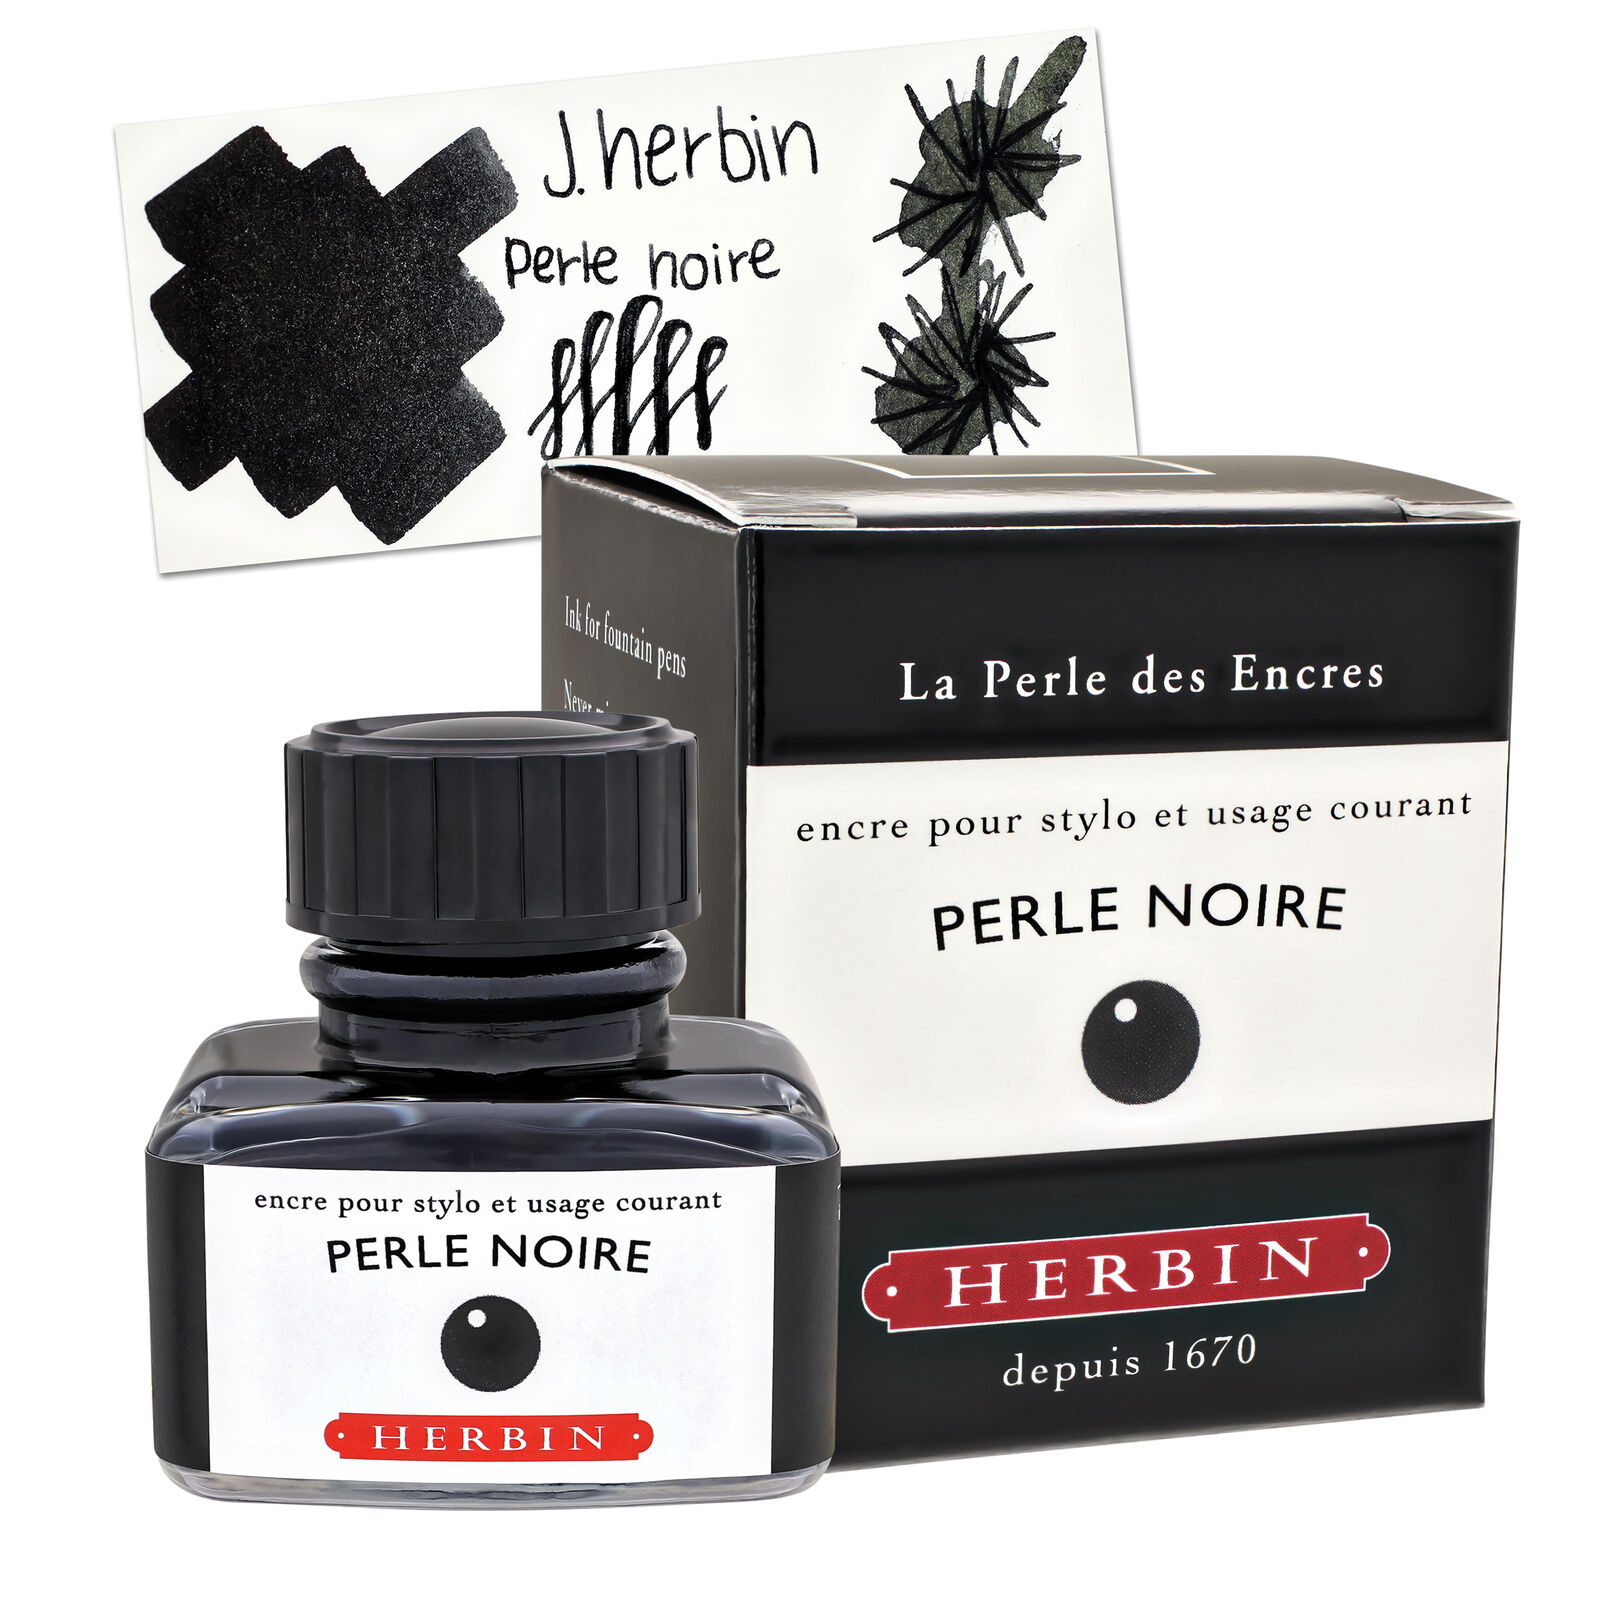 J. Herbin Bottled Ink for Fountain Pens in Perle Noire (Black Pearl) - 30 mL NEW